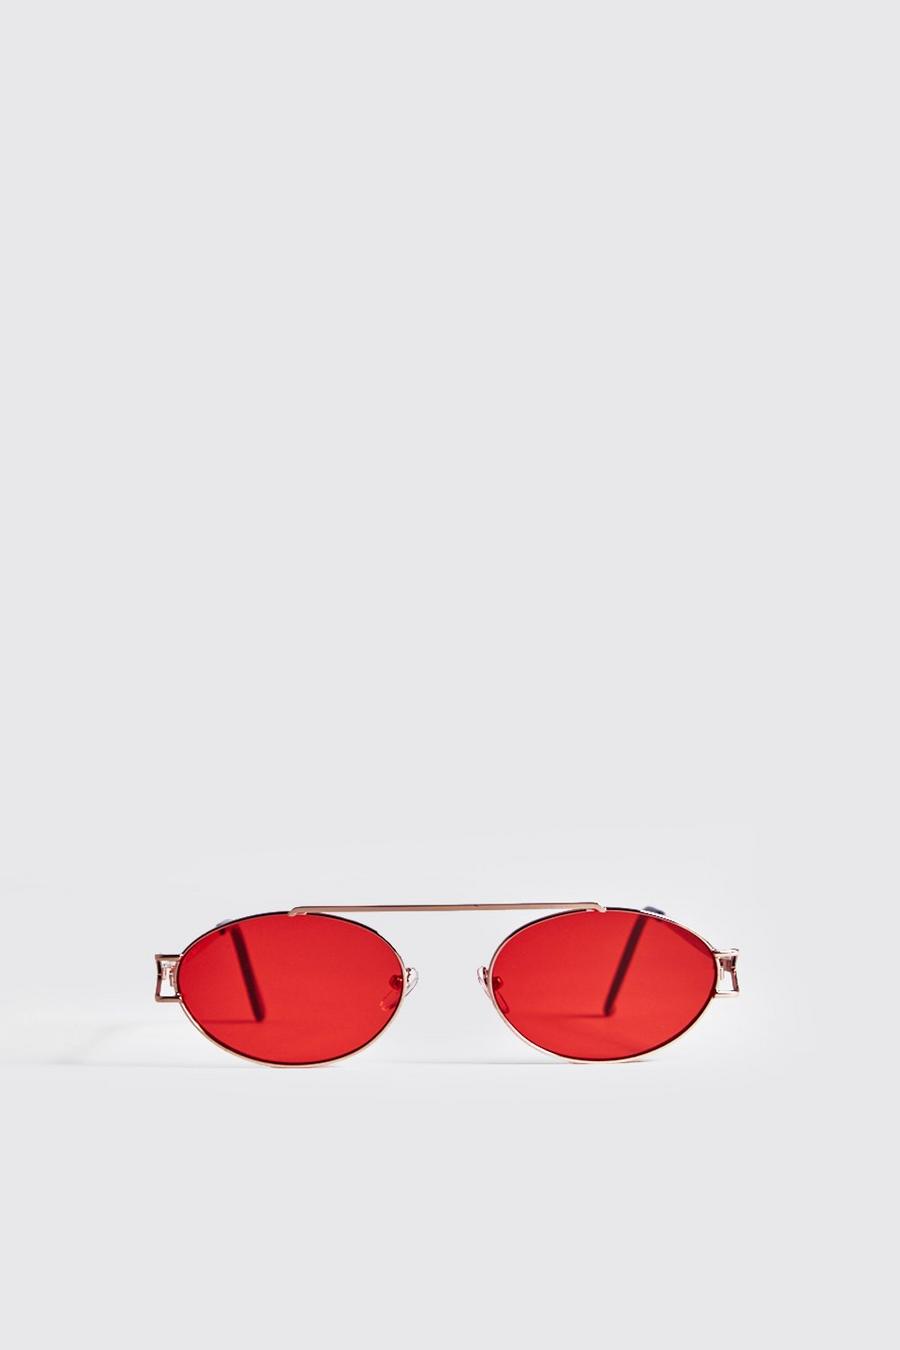 Gold Red Lens Round Metal Frame Sunglasses image number 1